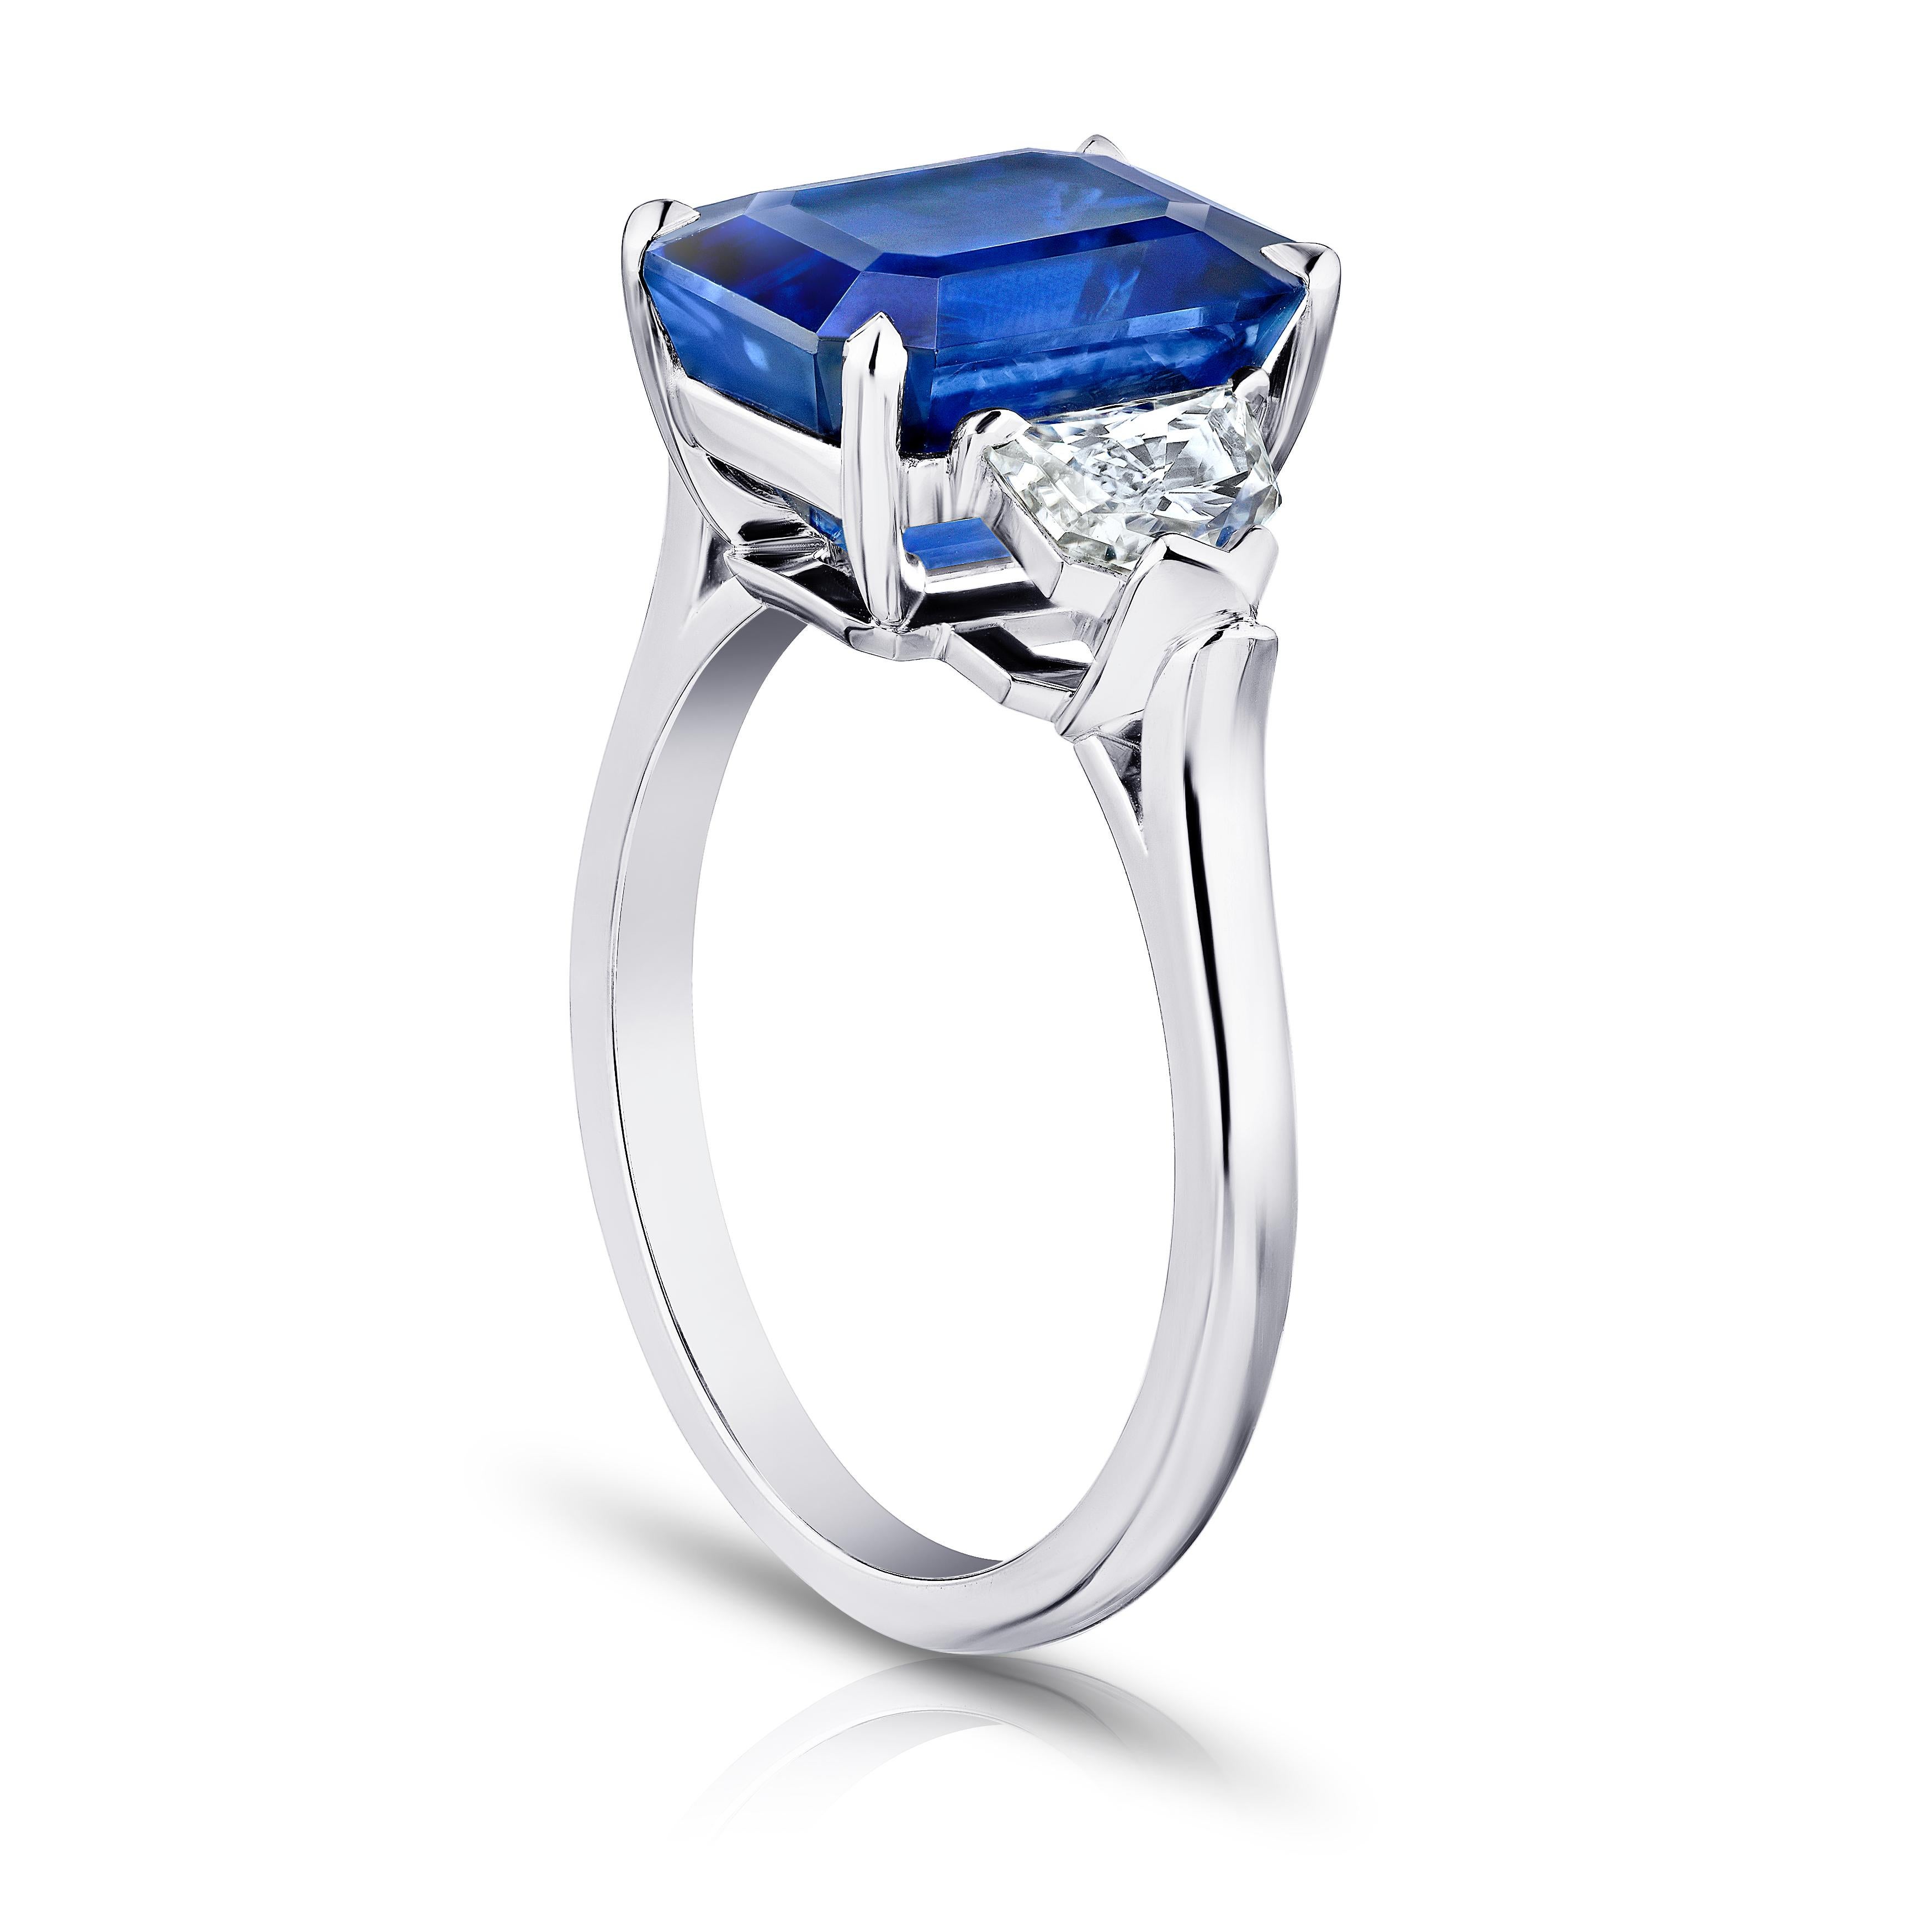 6.30 carat emerald cut blue sapphire with epaulet diamonds .95 carats set in a platinum ring.